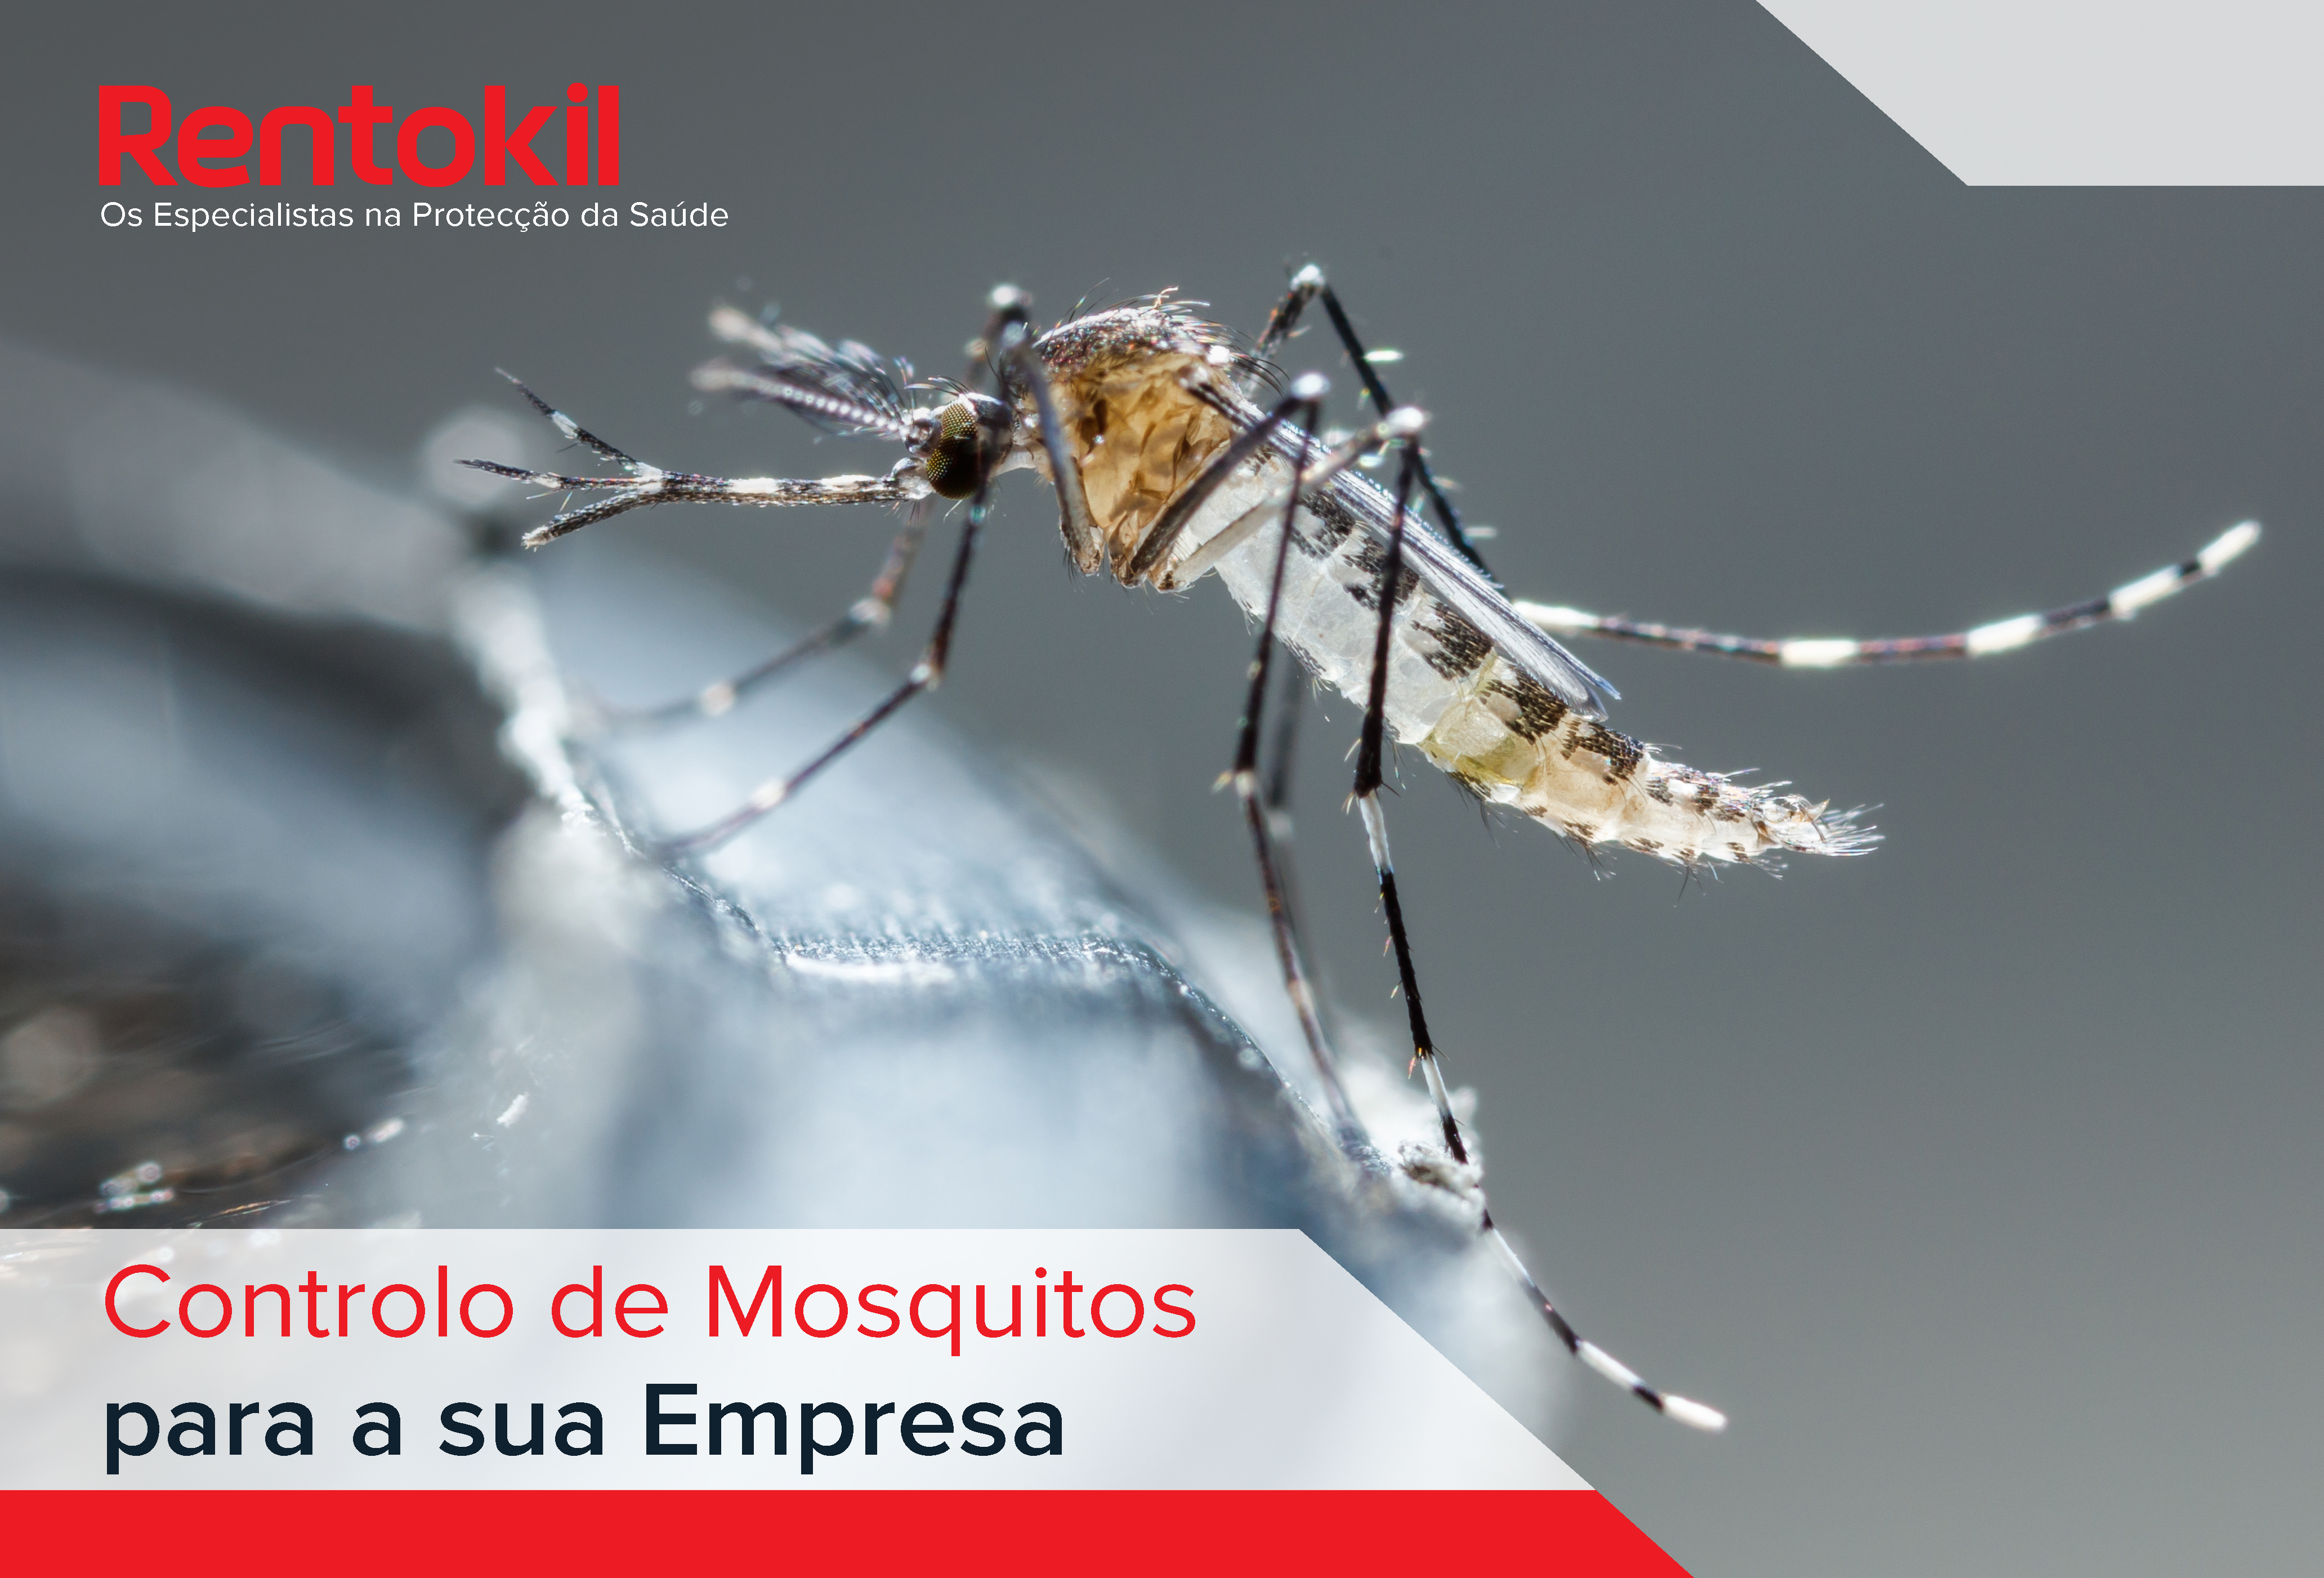 Rentokil_Controlo de Mosquitos para Empresas